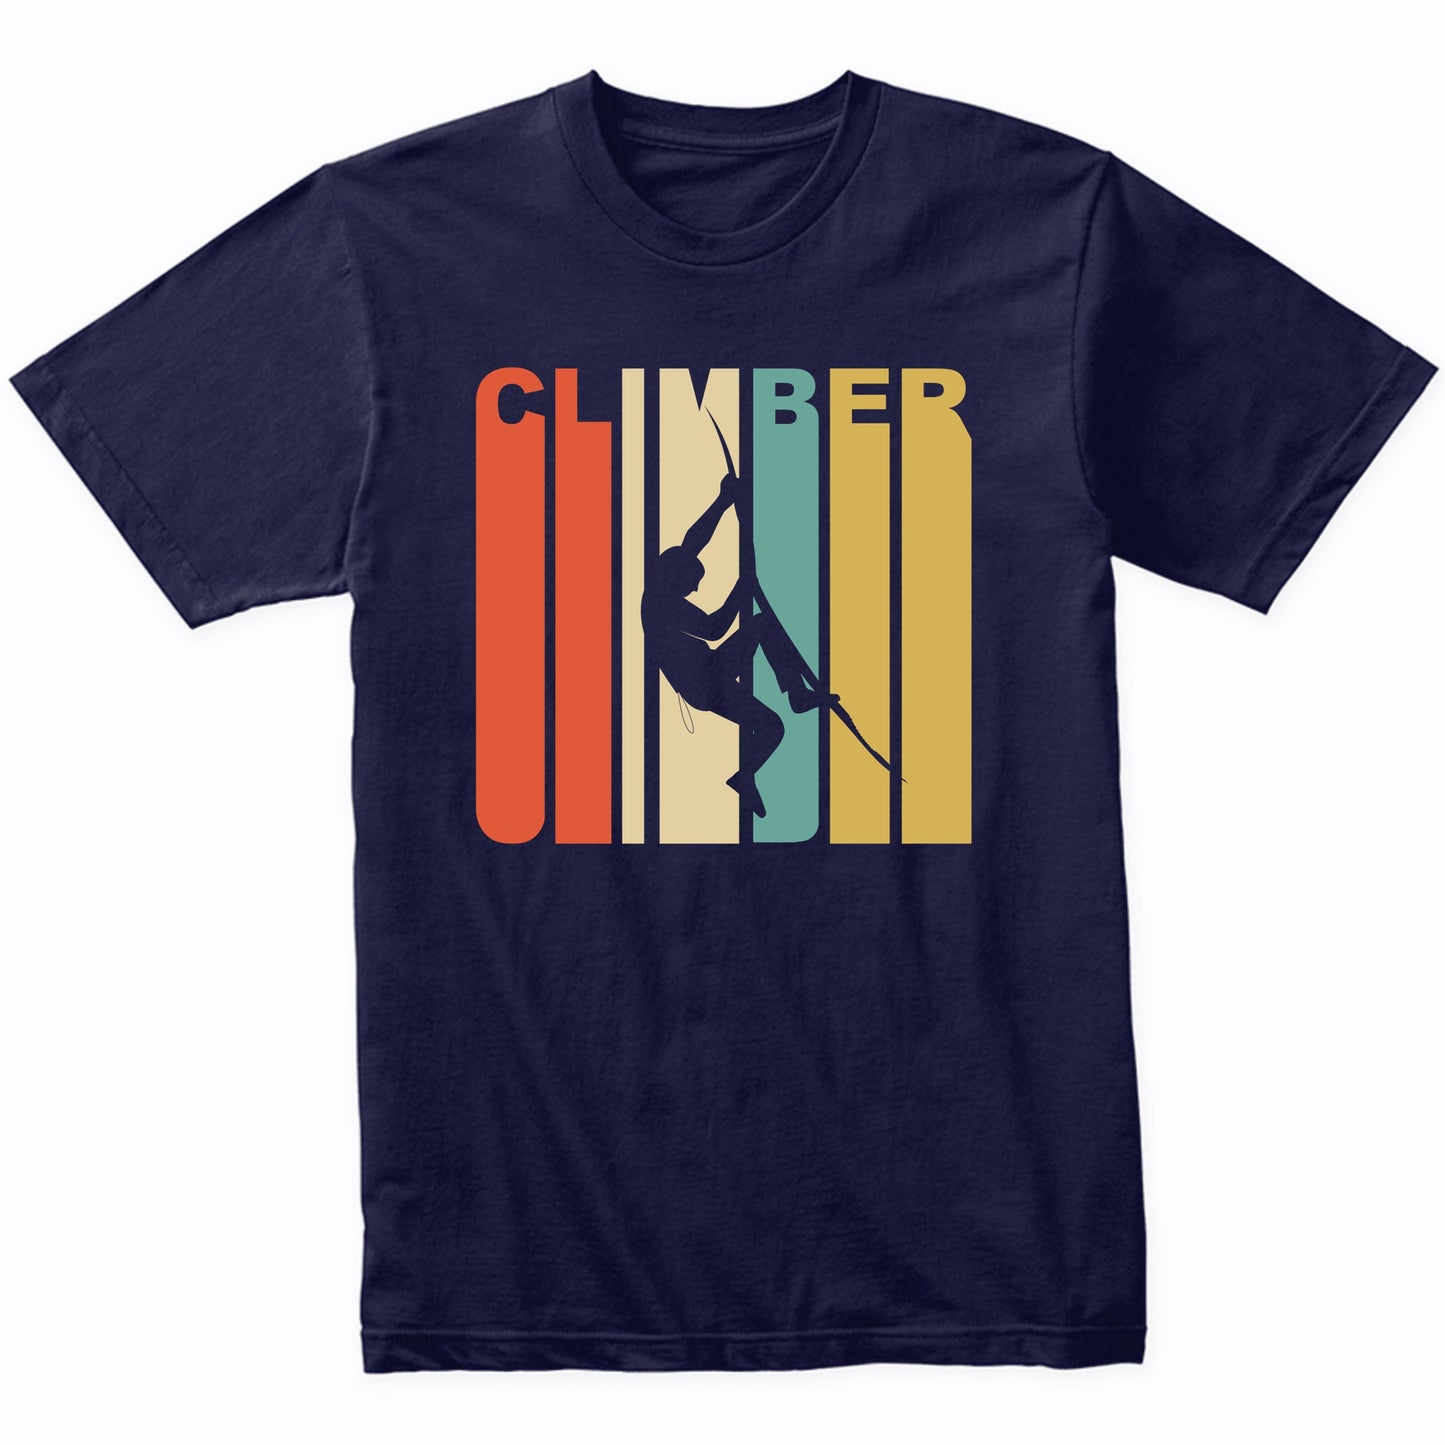 Retro 1970's Style Rock Climber Silhouette Climbing T-Shirt